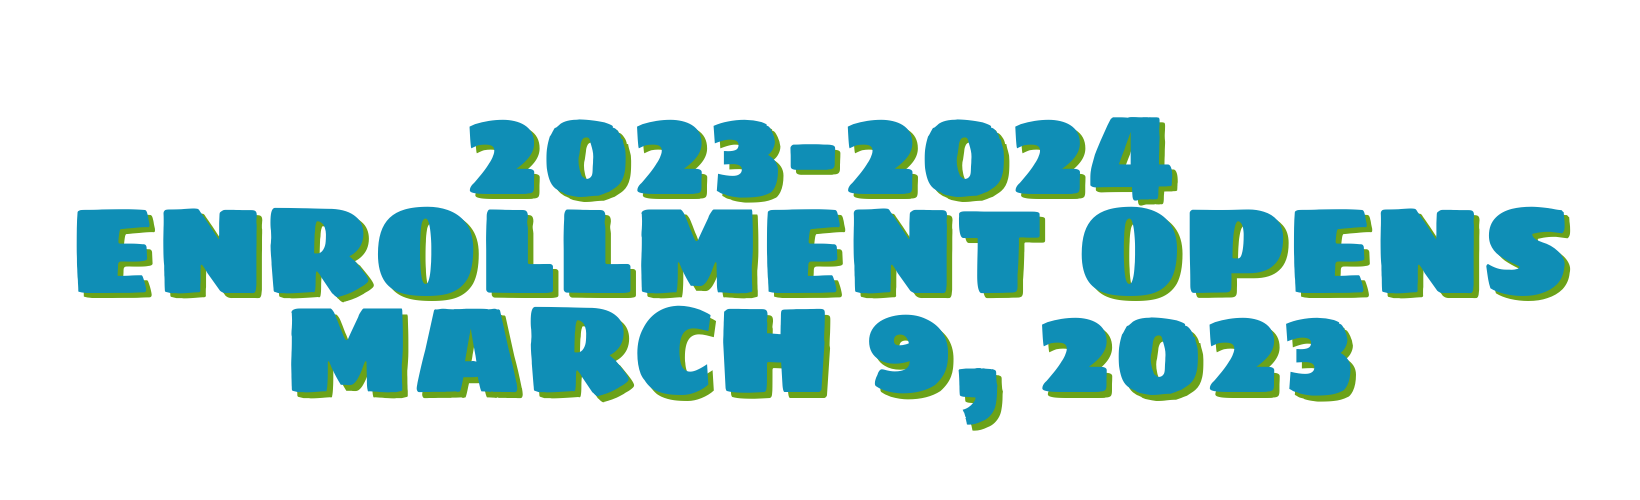 Enrollment Opens March 9, 2023